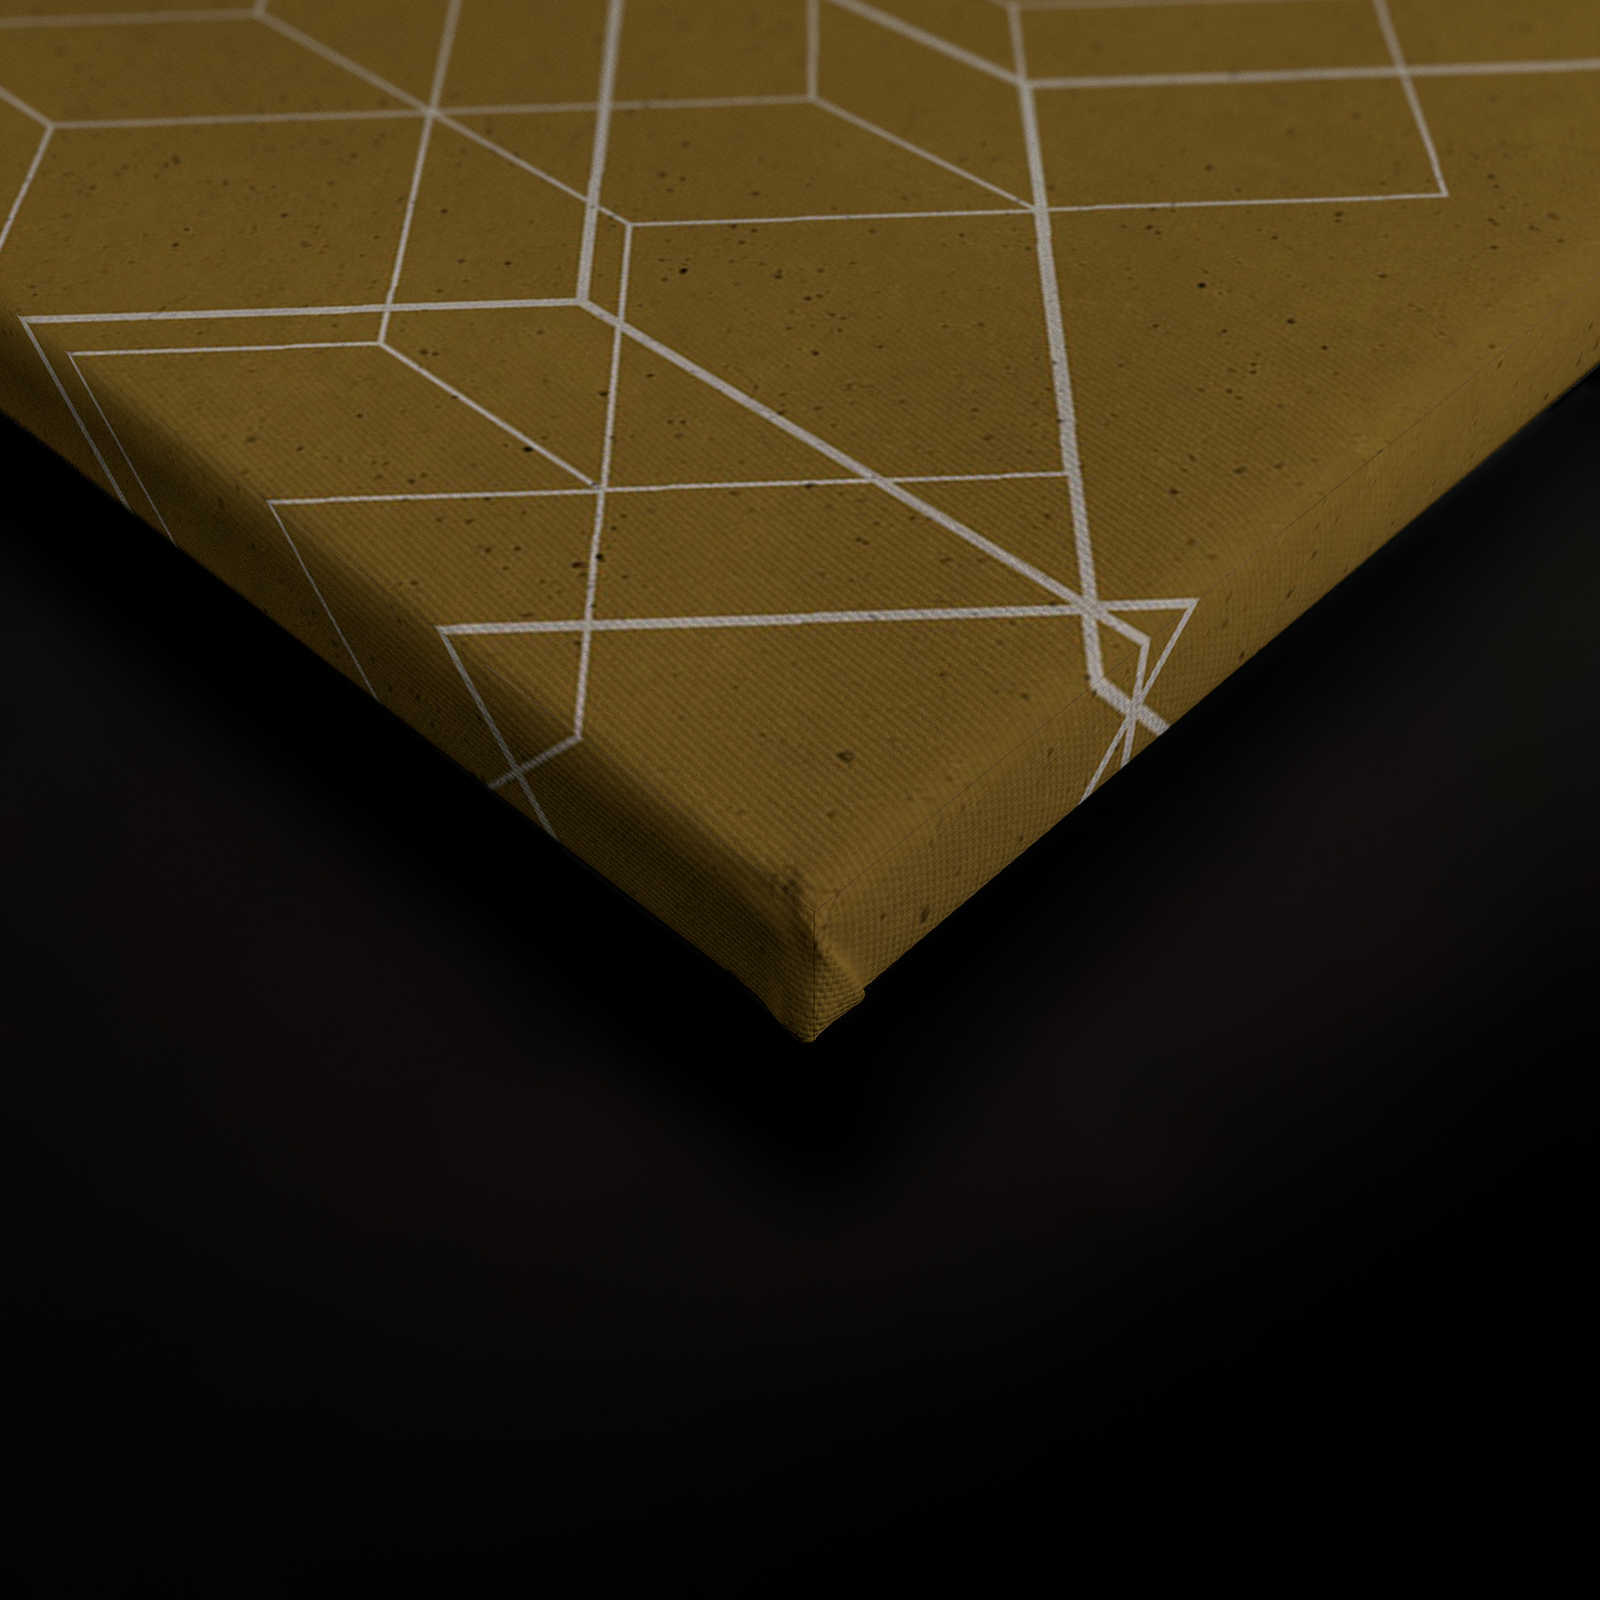             Leinwandbild geometrisches Muster – 0,90 m x 0,60 m
        